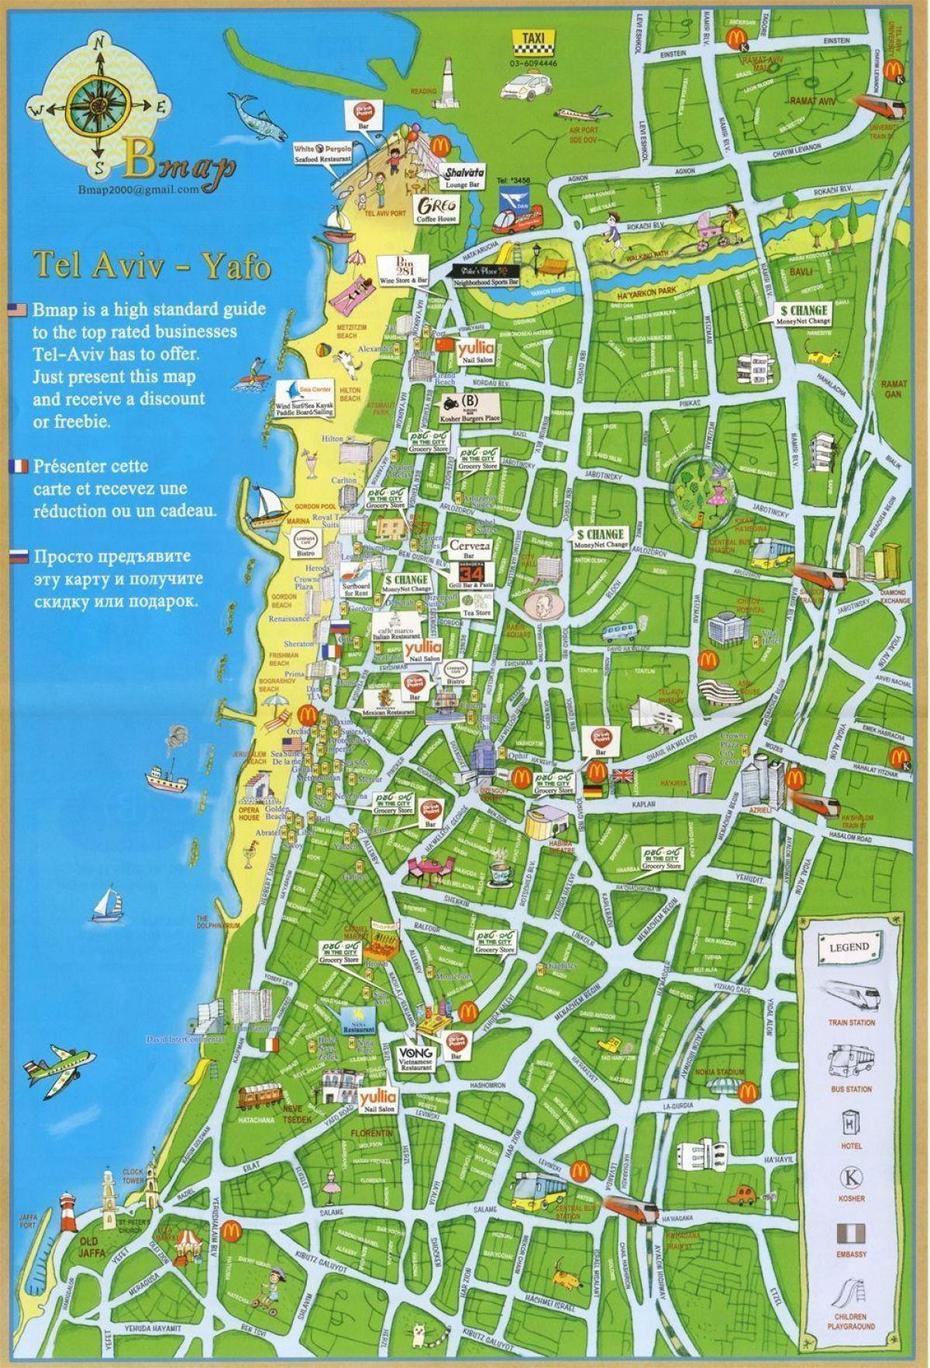 Tel Aviv Tourist Map – Tel Aviv-Jaffa Sehenswurdigkeiten Karte (Israel), Tel Aviv-Yafo, Israel, Jerusalem Tel Aviv, Tel Aviv Homes